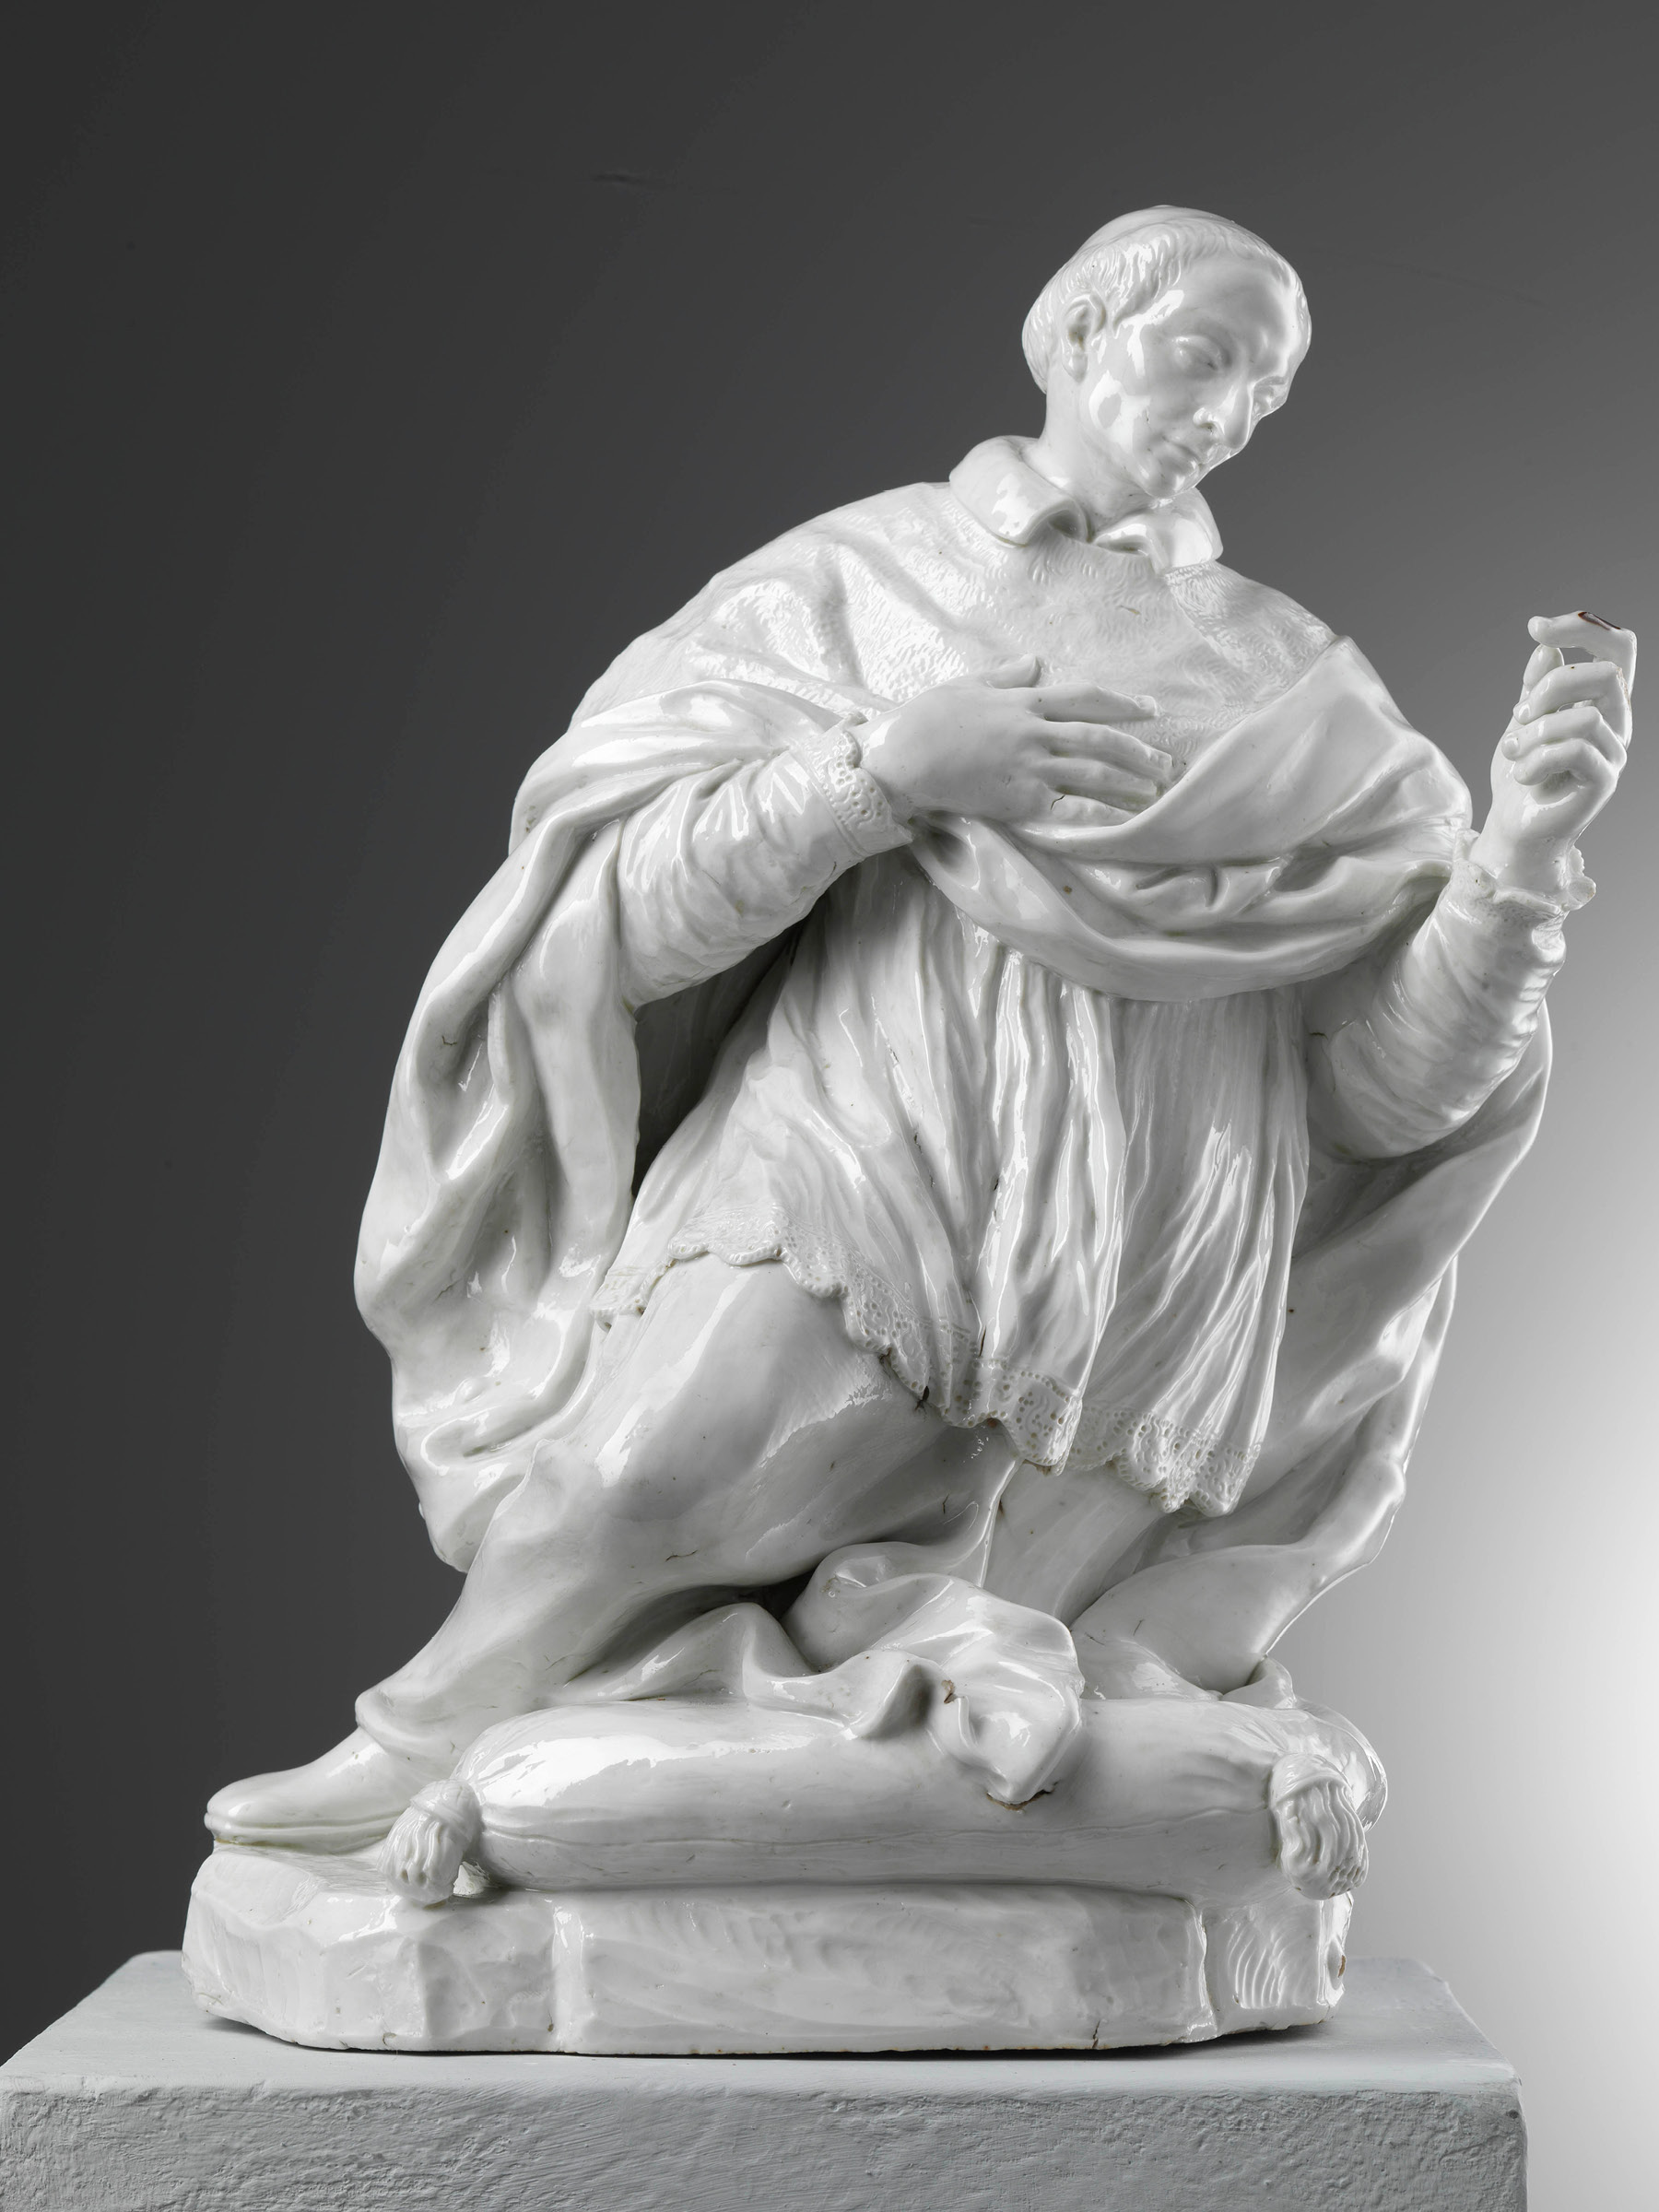 Giovan Battista Foggini - from a model by St Charles Borromeo in Adoration of the Crucifix